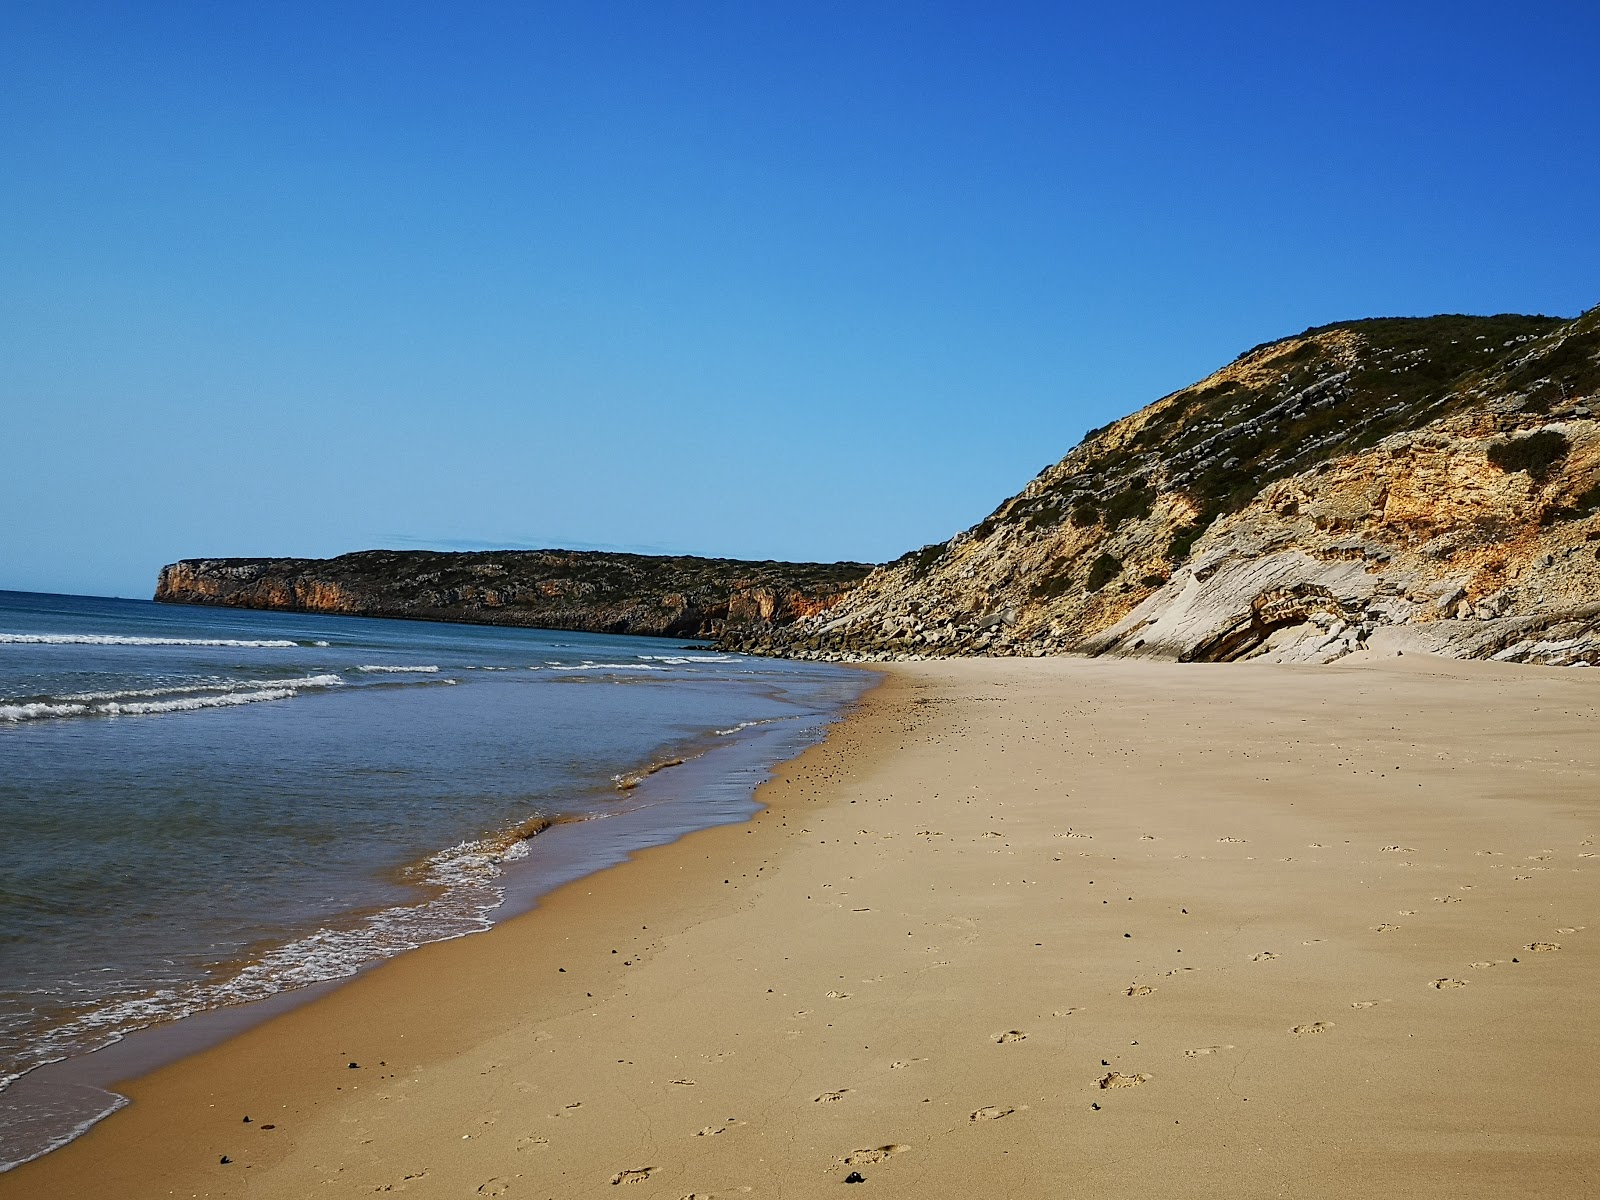 Fotografija Praia da Figueira z turkizna čista voda površino